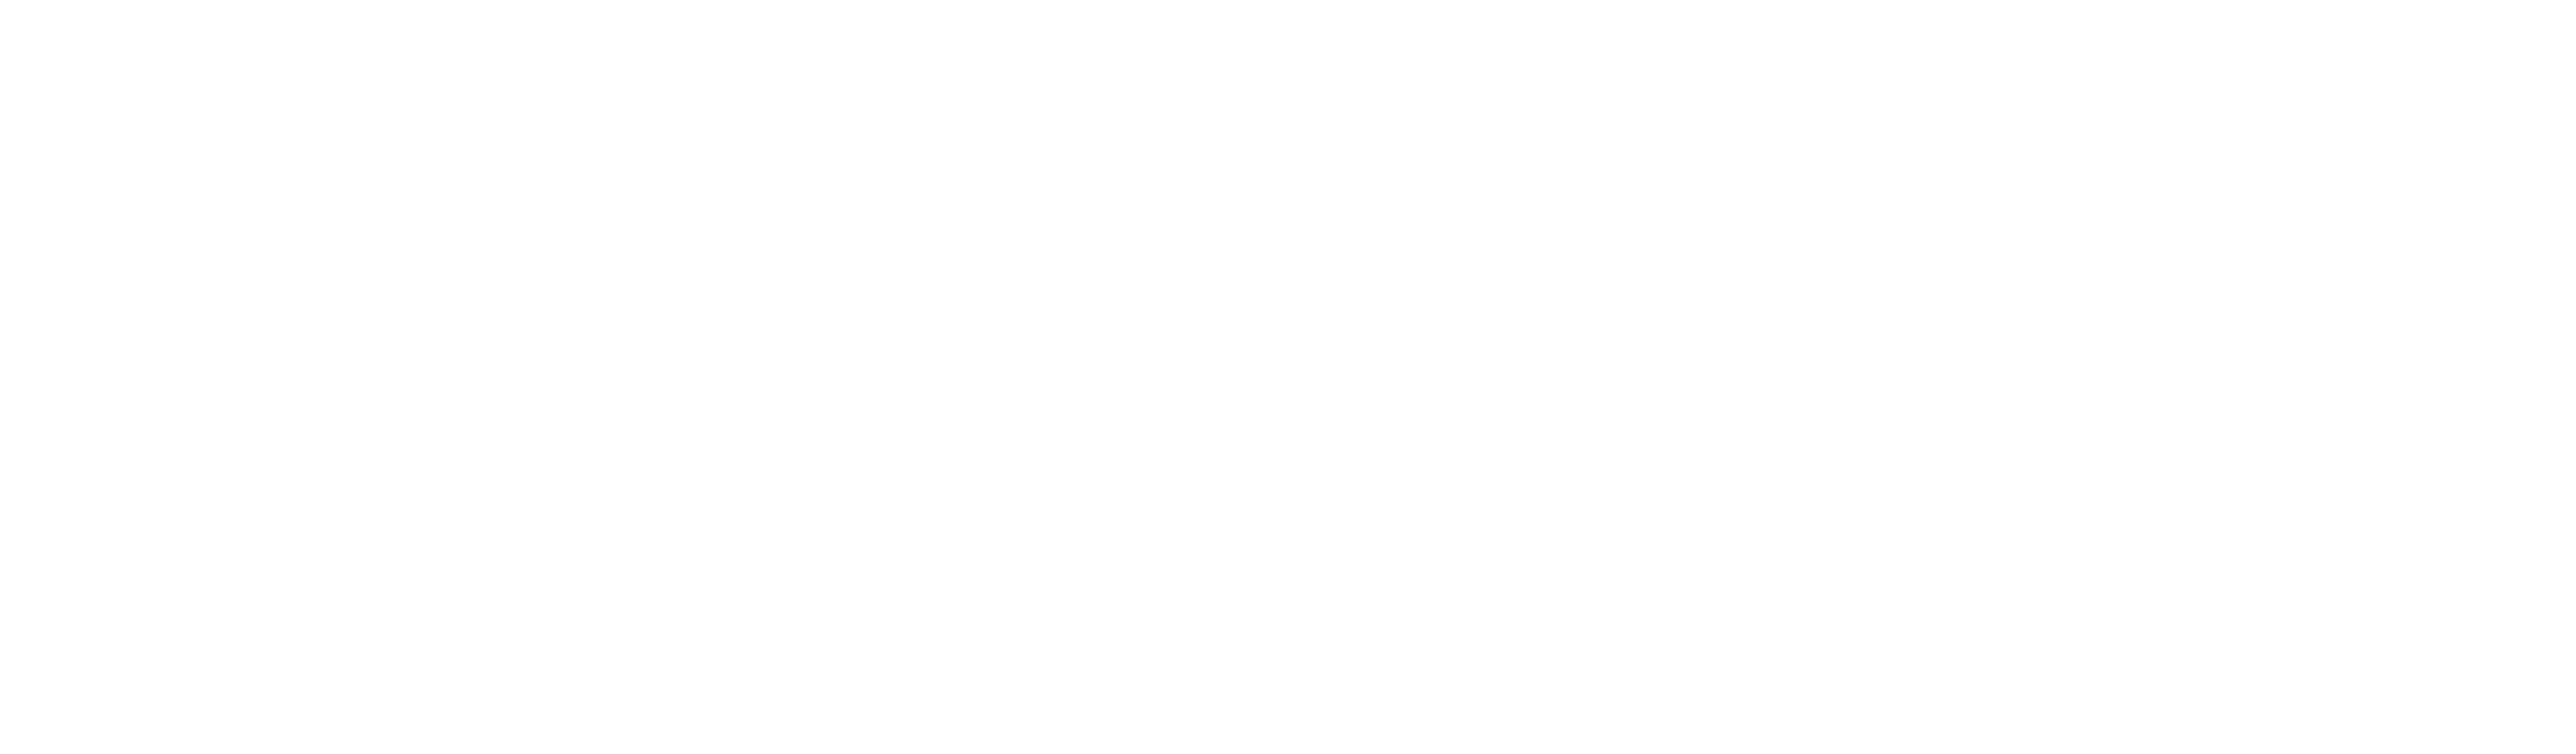 Logo Destockage blanc